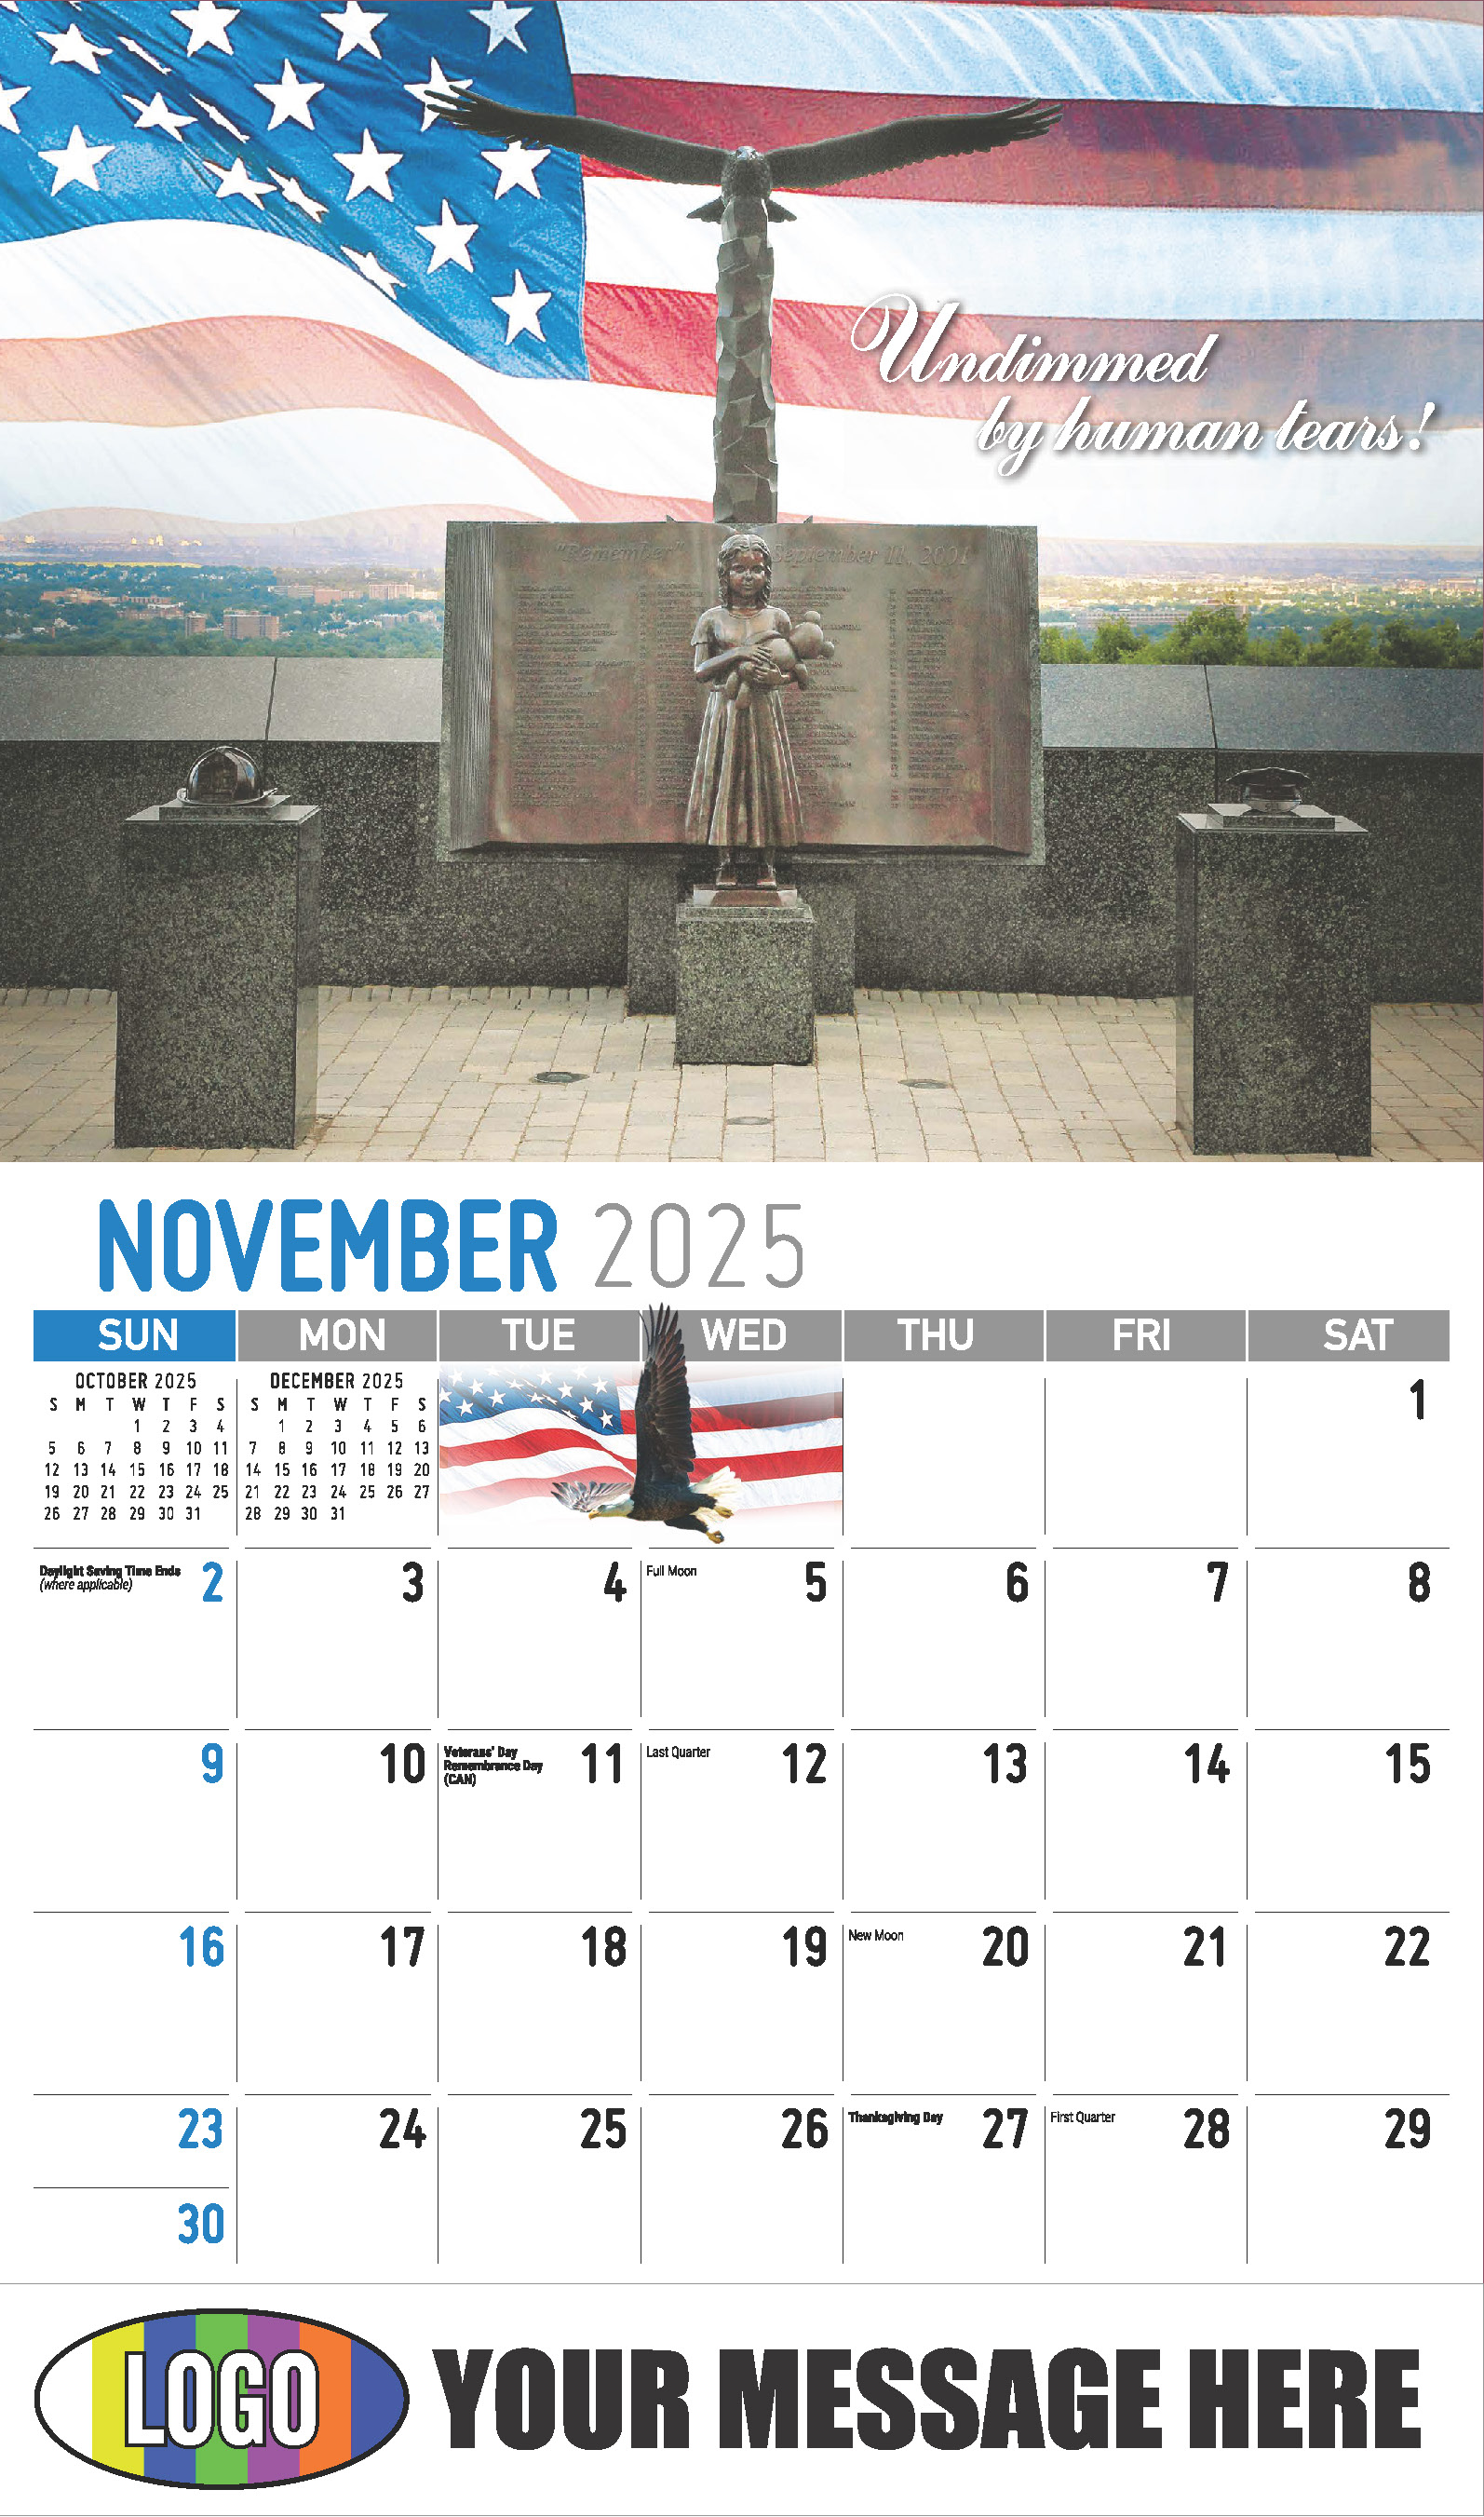 America the Beautiful  2025 Business Advertising Wall Calendar - November